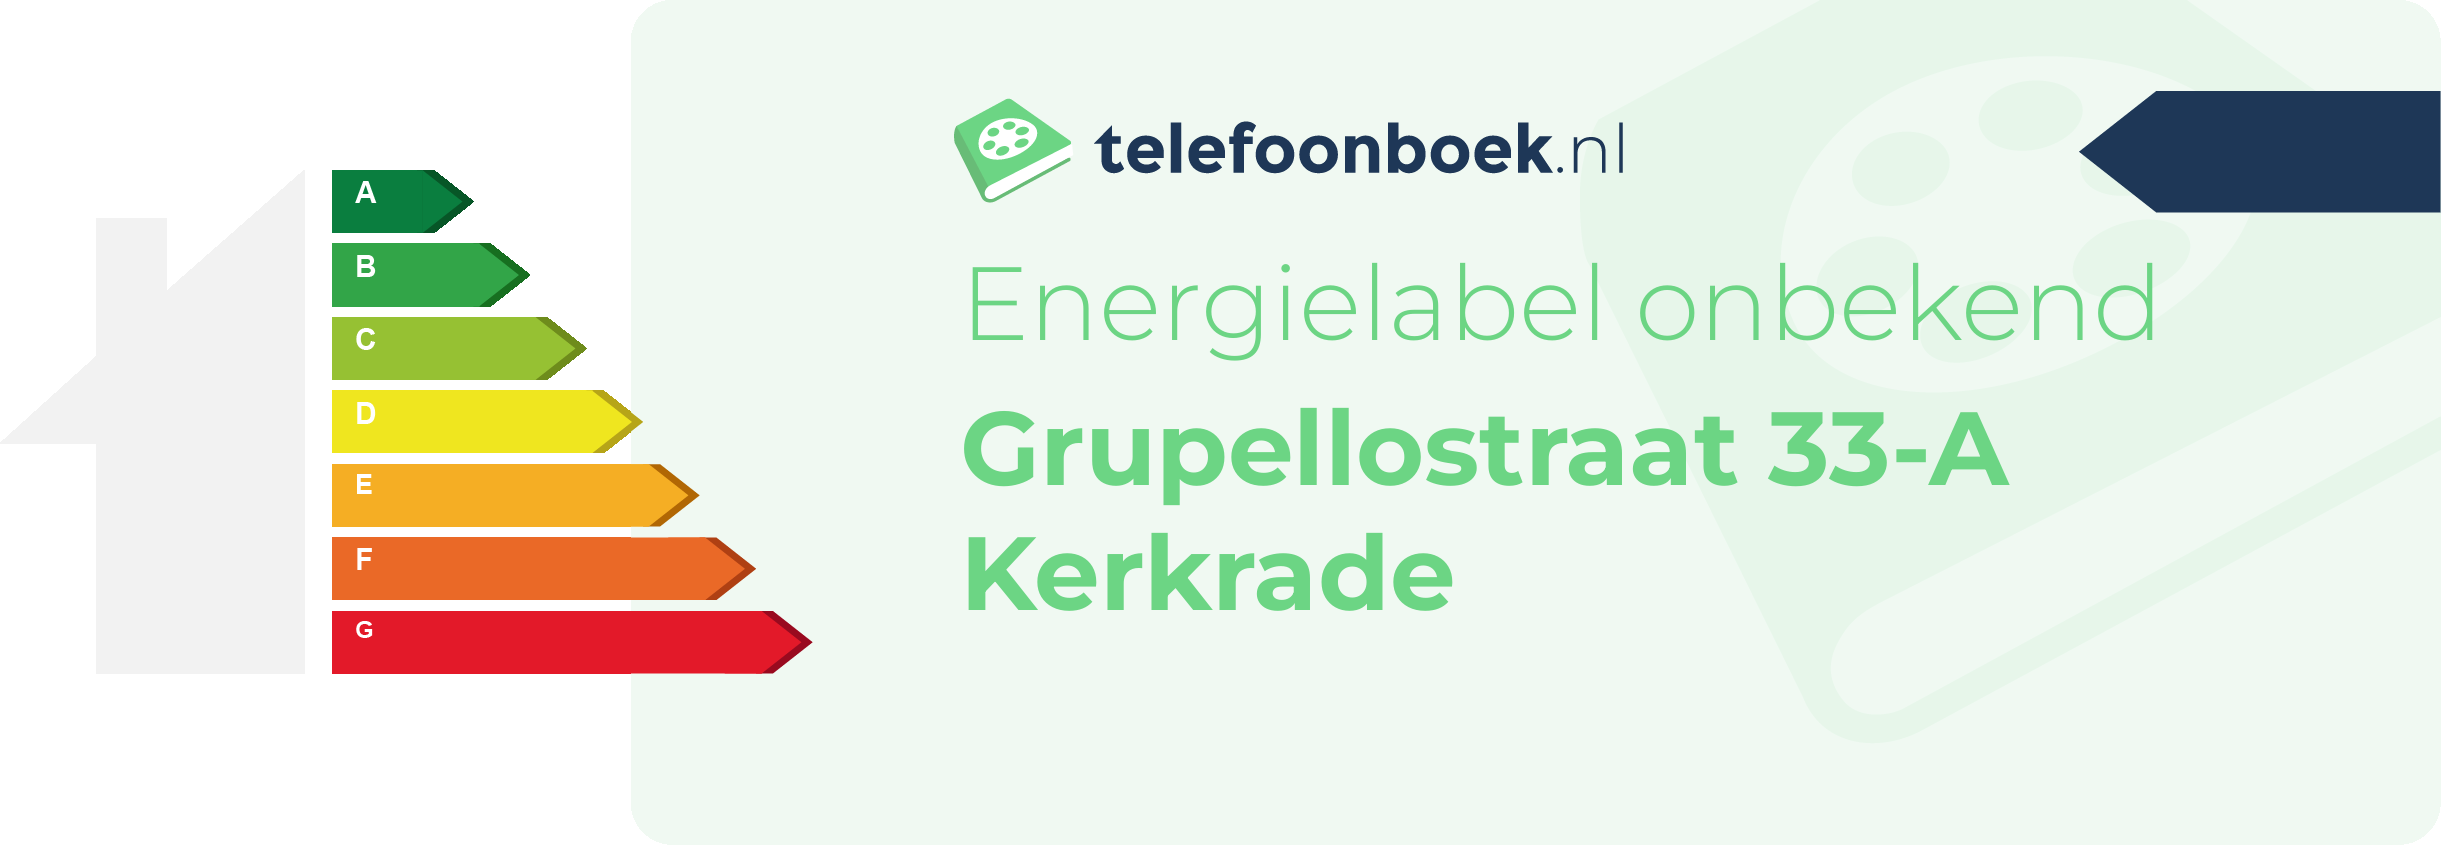 Energielabel Grupellostraat 33-A Kerkrade